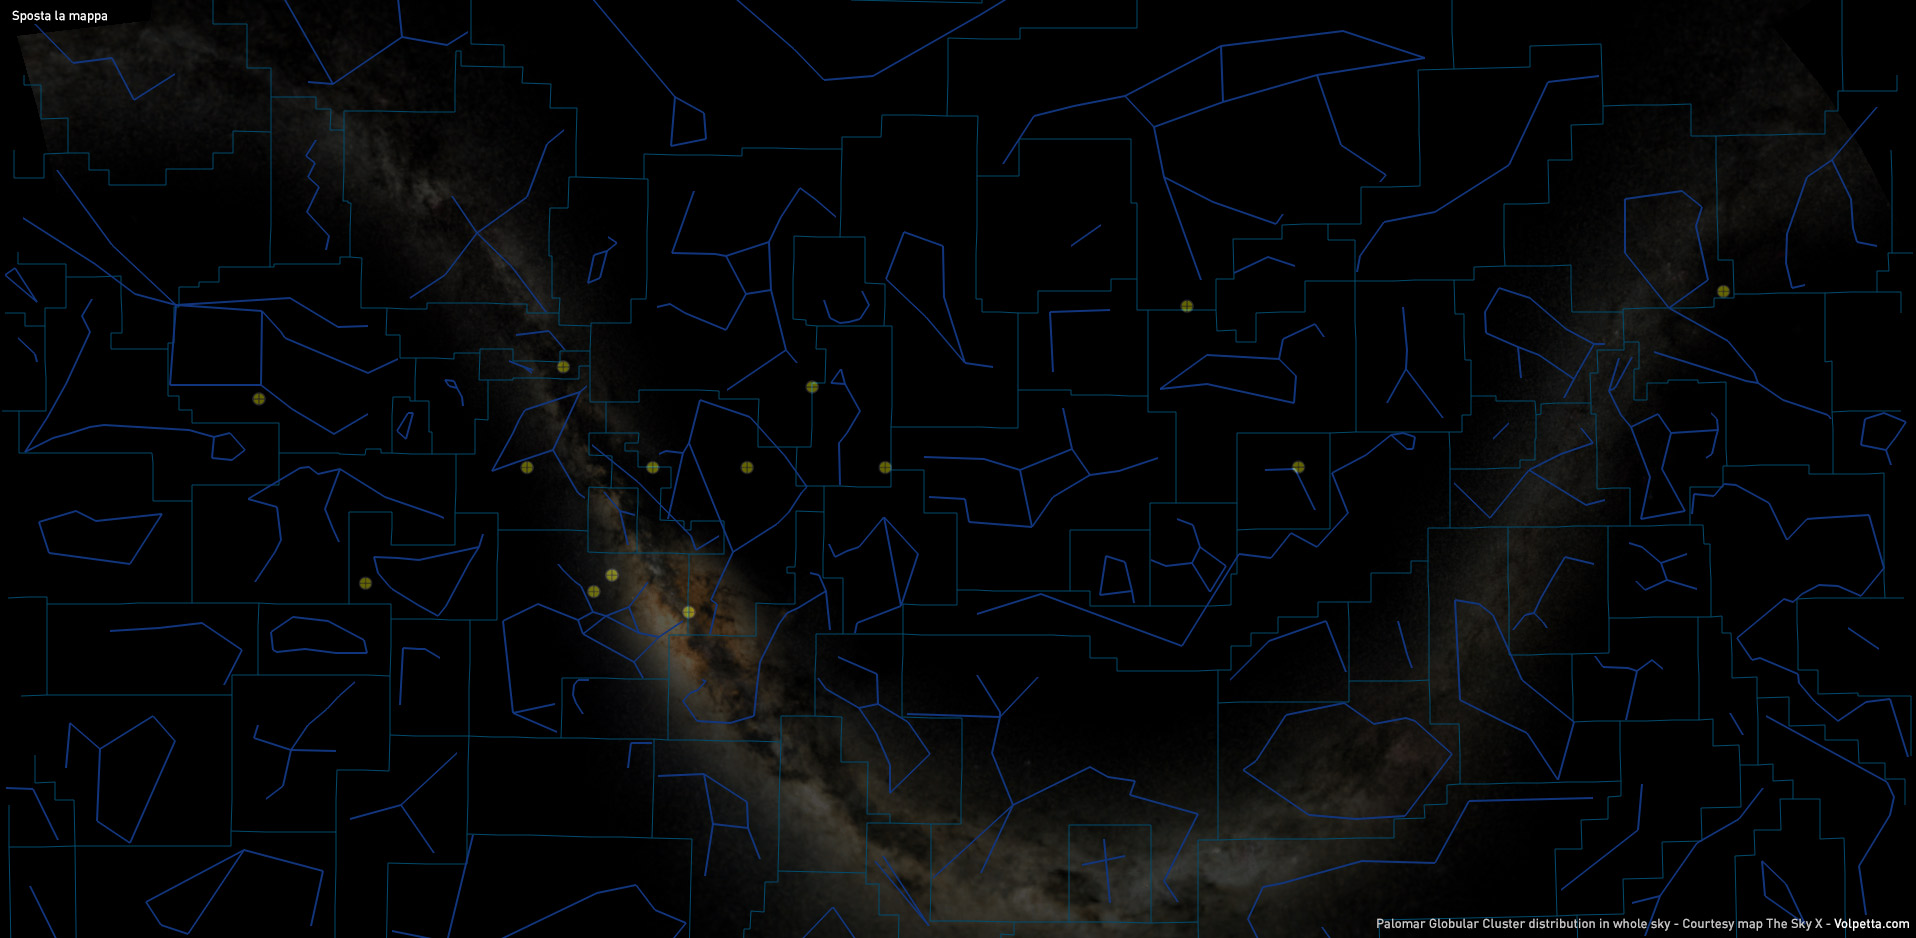 Mappa generale degli ammassi globulari di Palomar